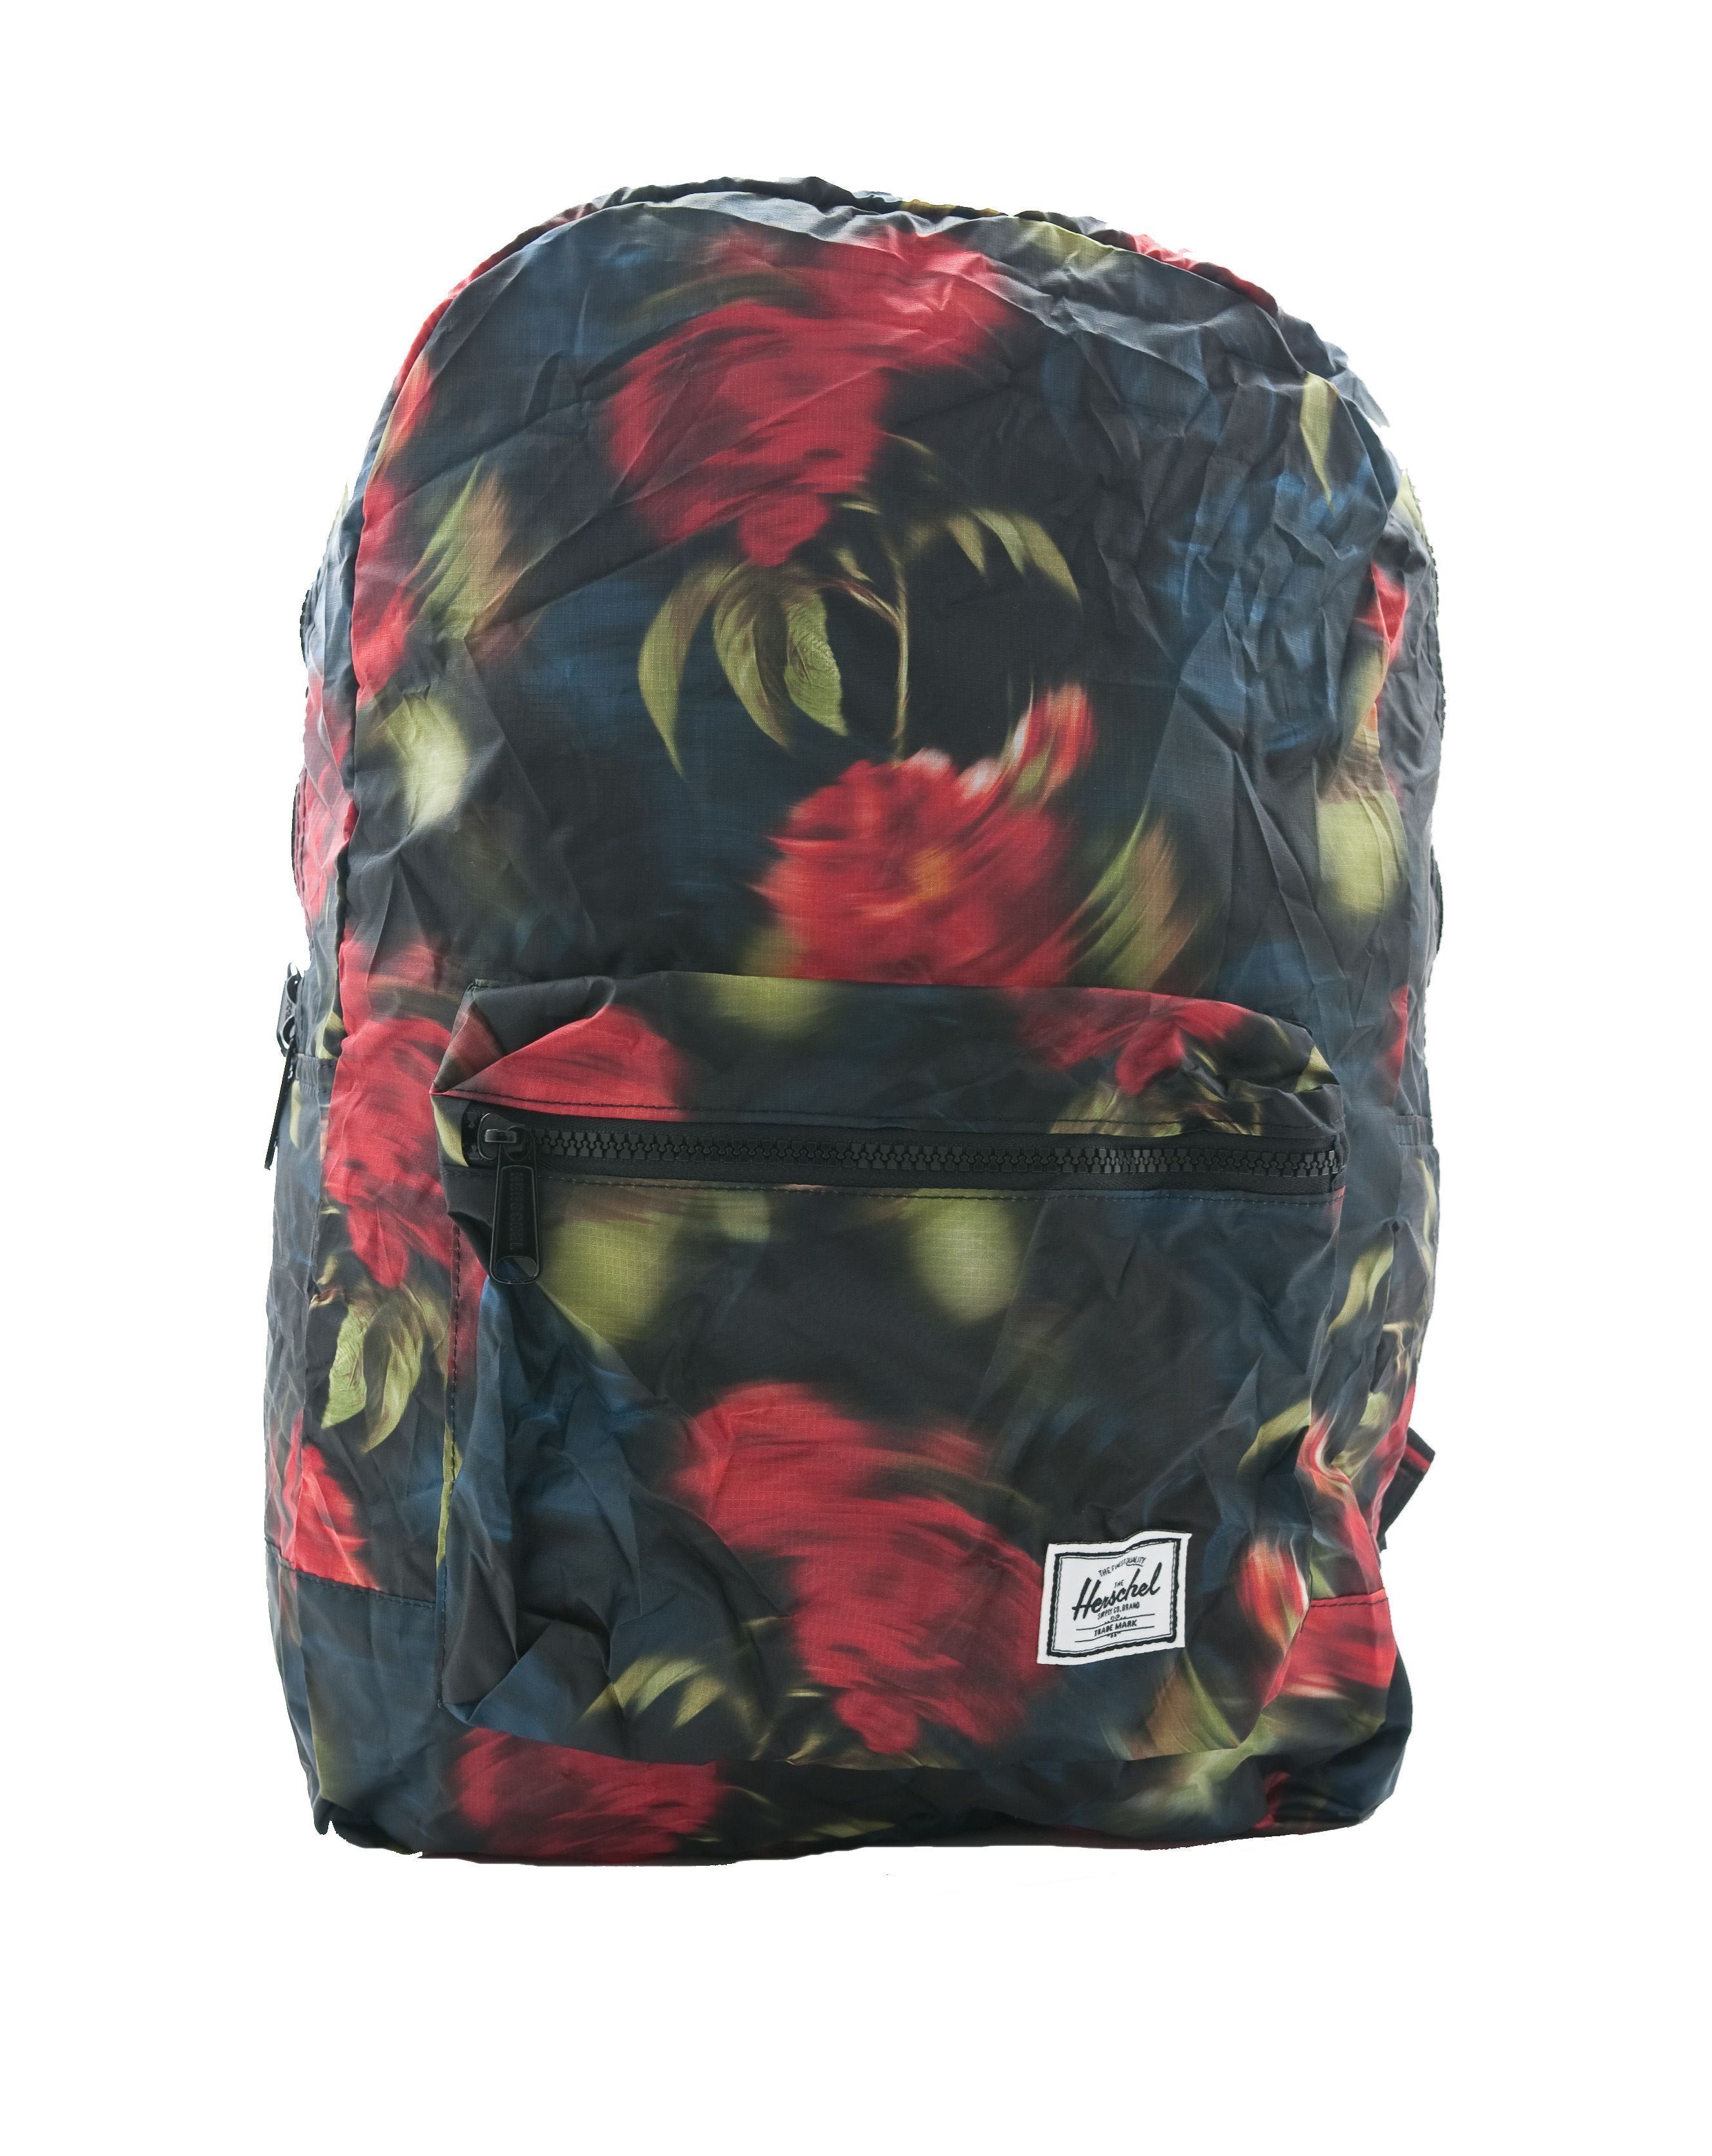 Immagine di Packable Daypack Blurry Roses